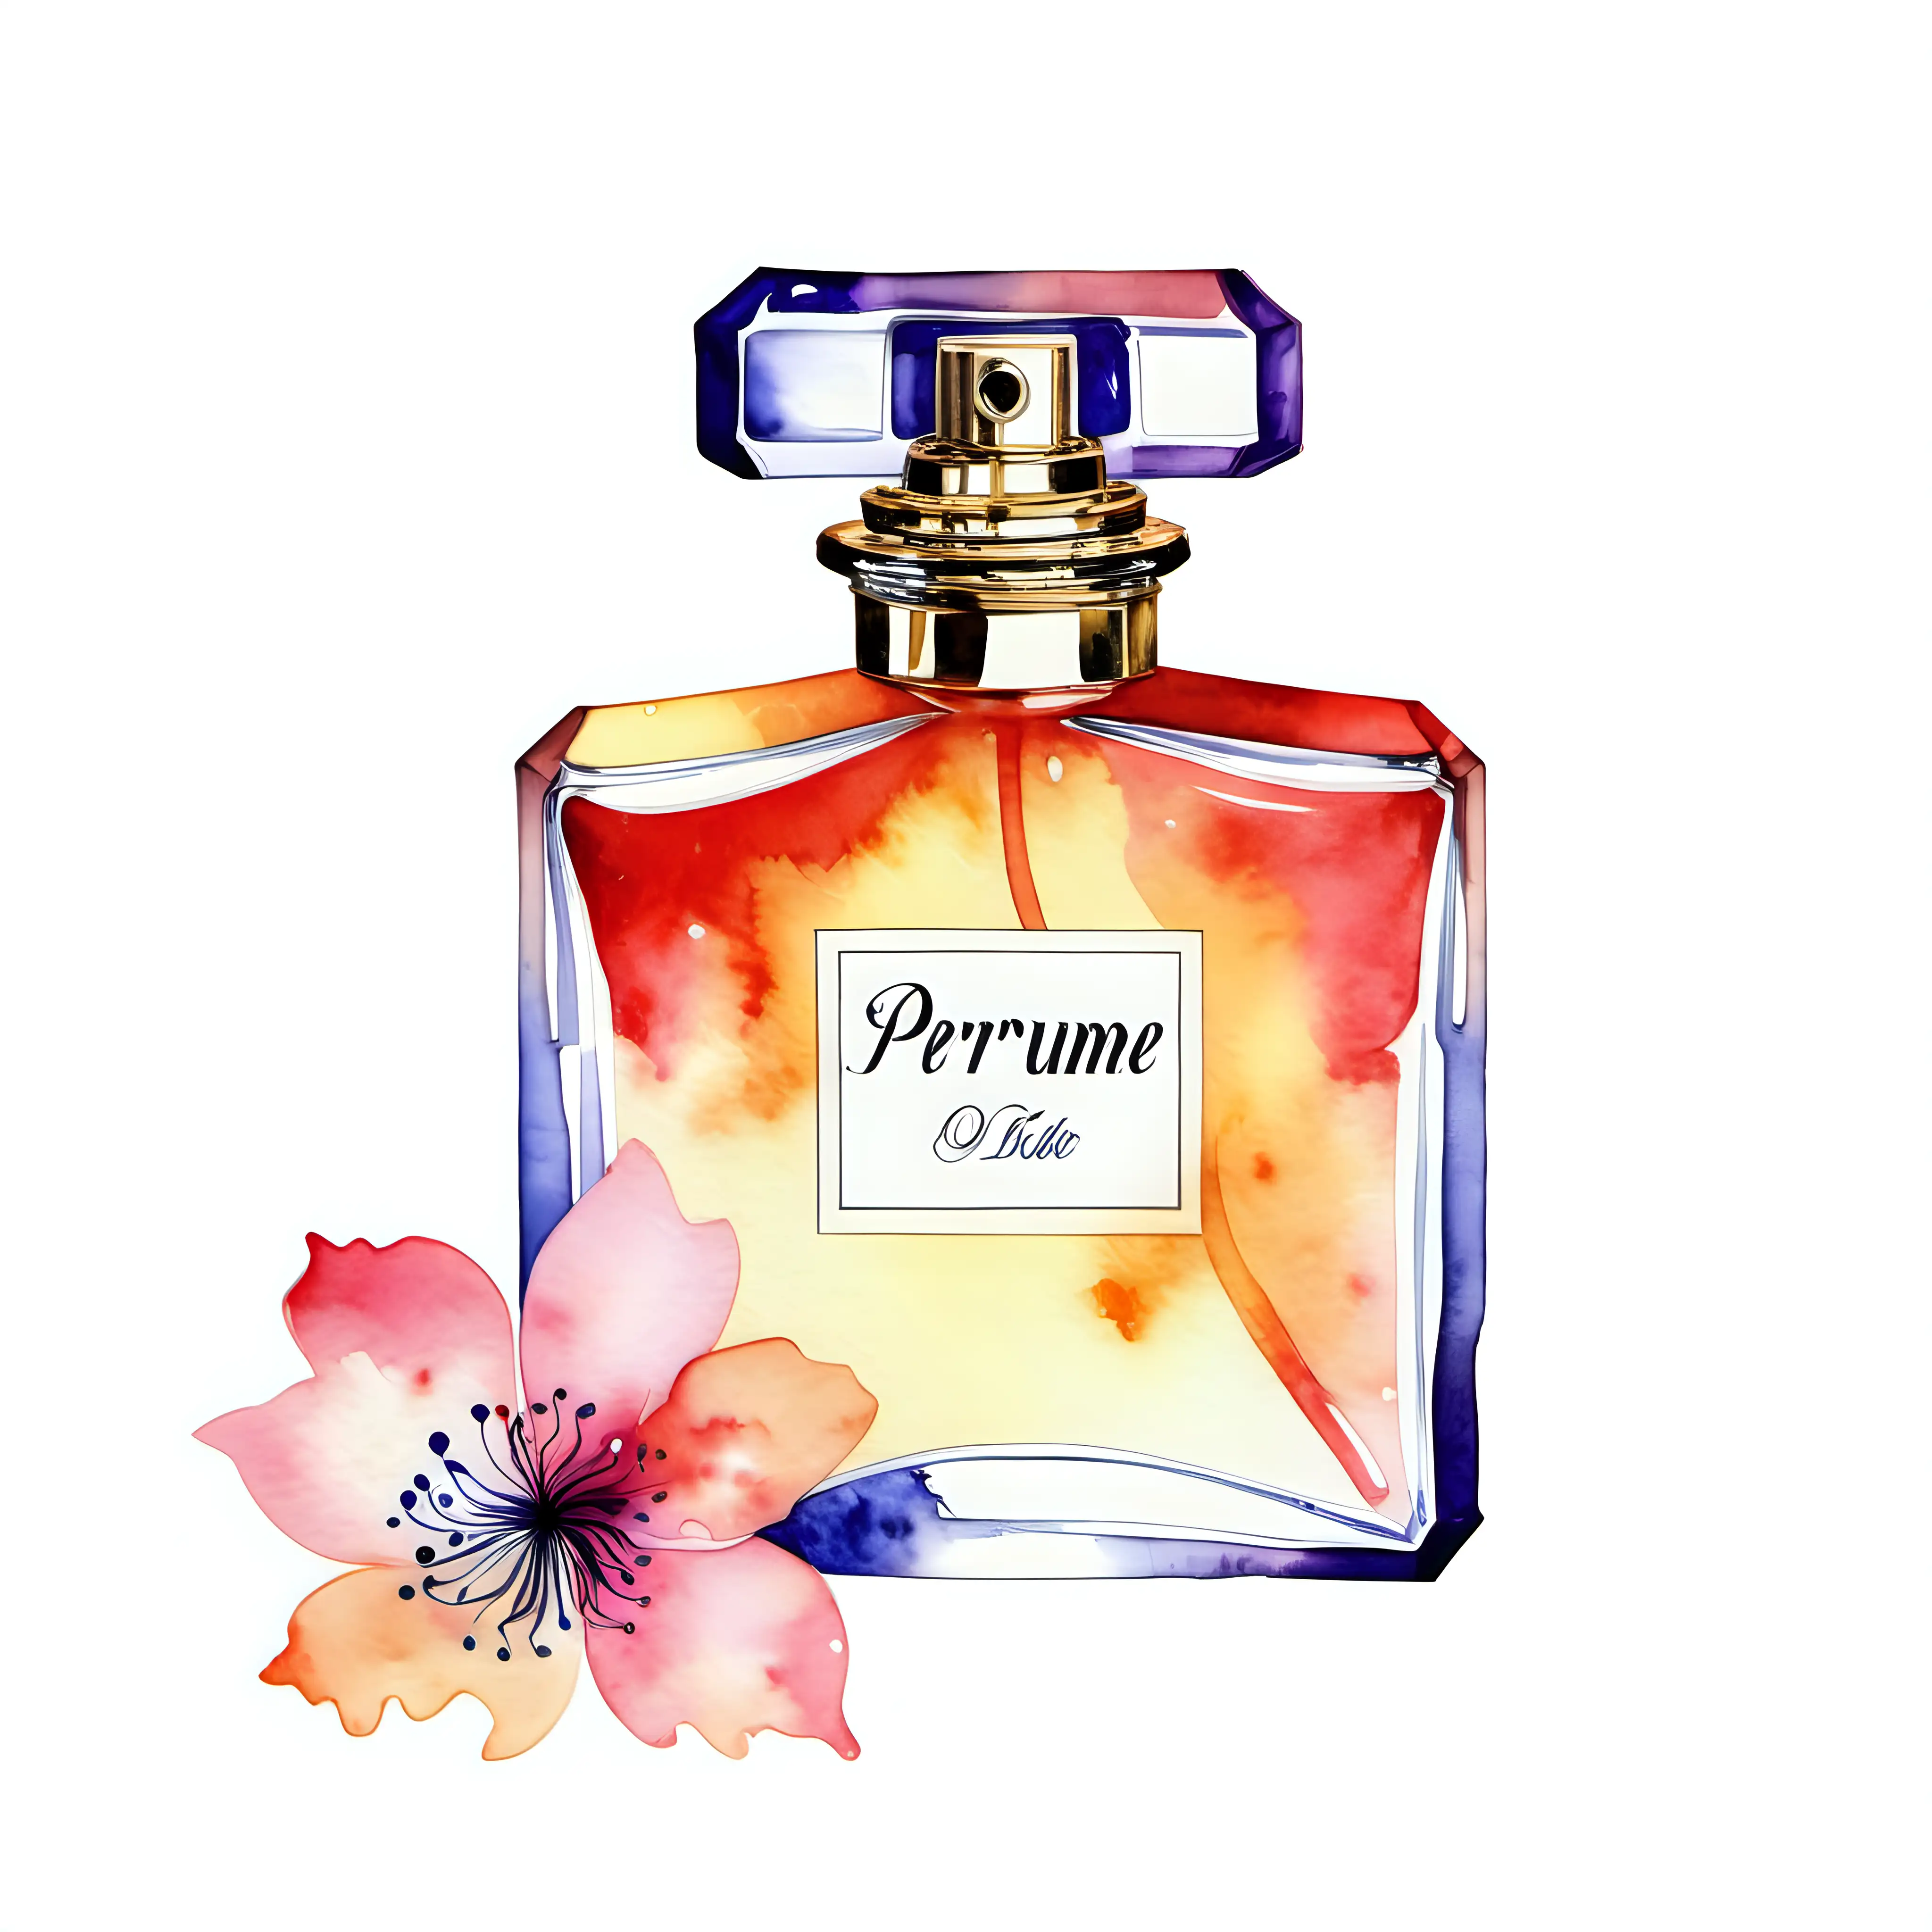 Elegant Watercolor Illustration of a Perfume Bottle